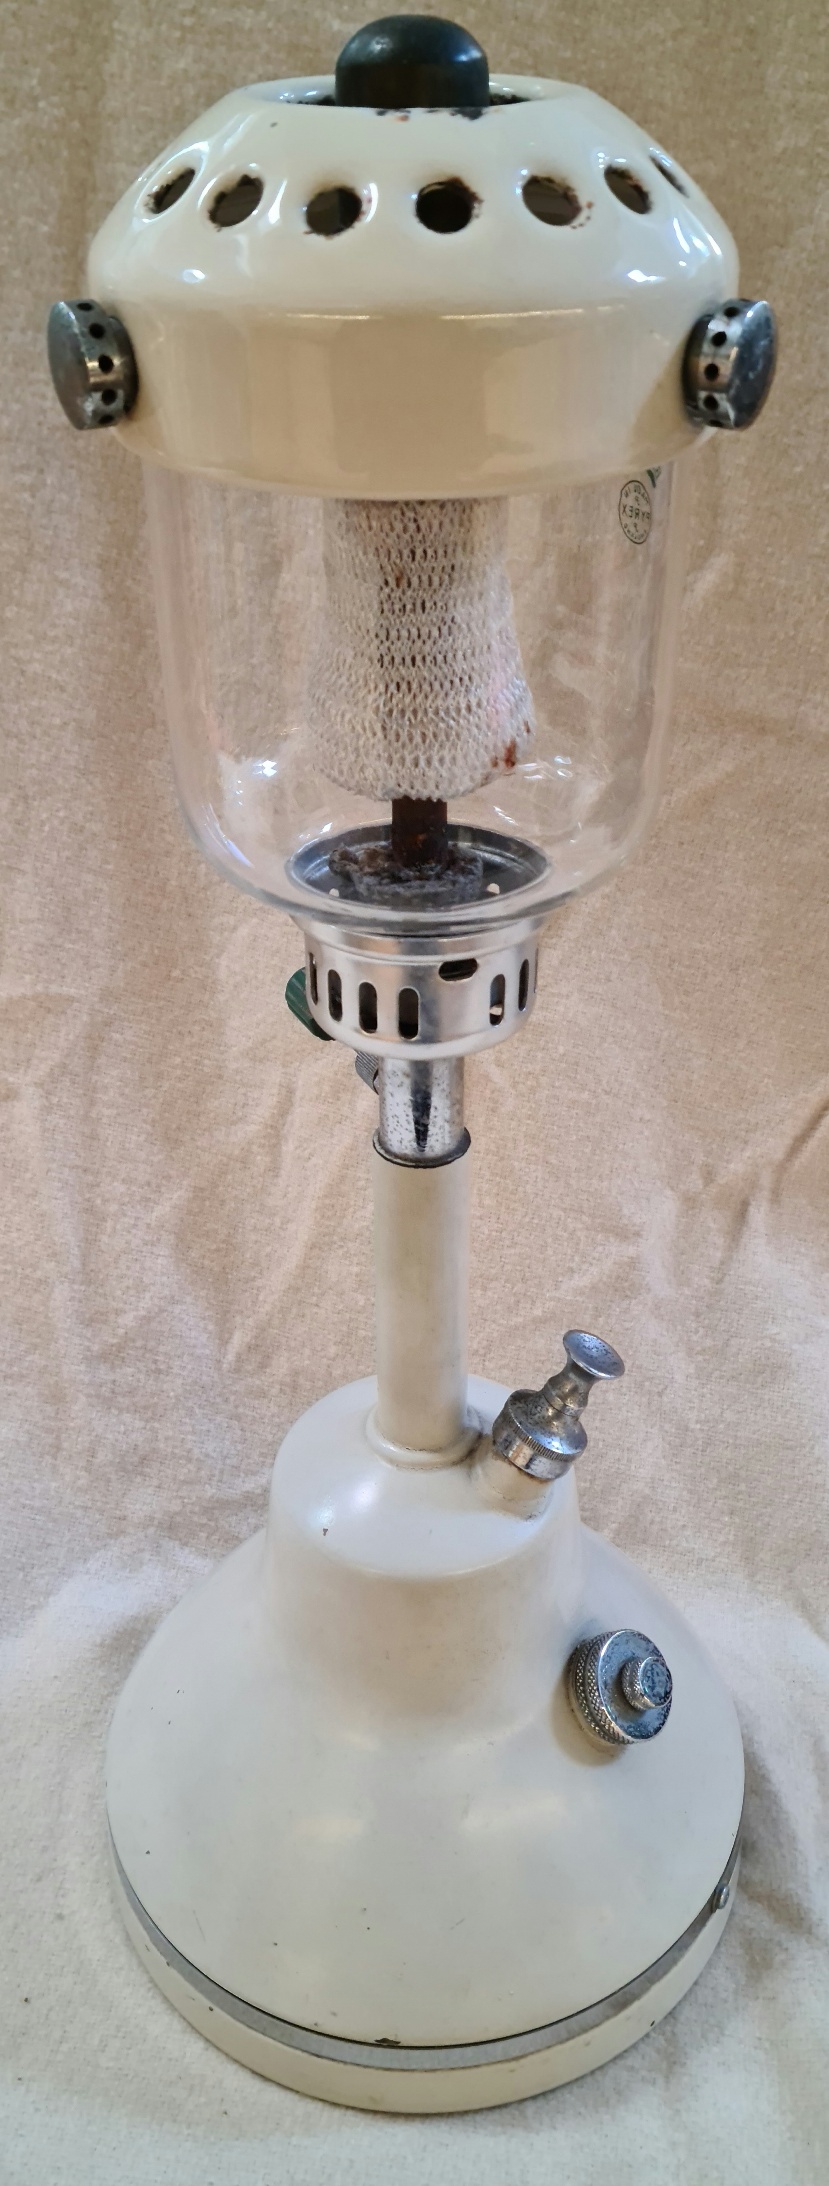 A 1950s/1960s vintage Bialaddin pressure lamp, model T10.